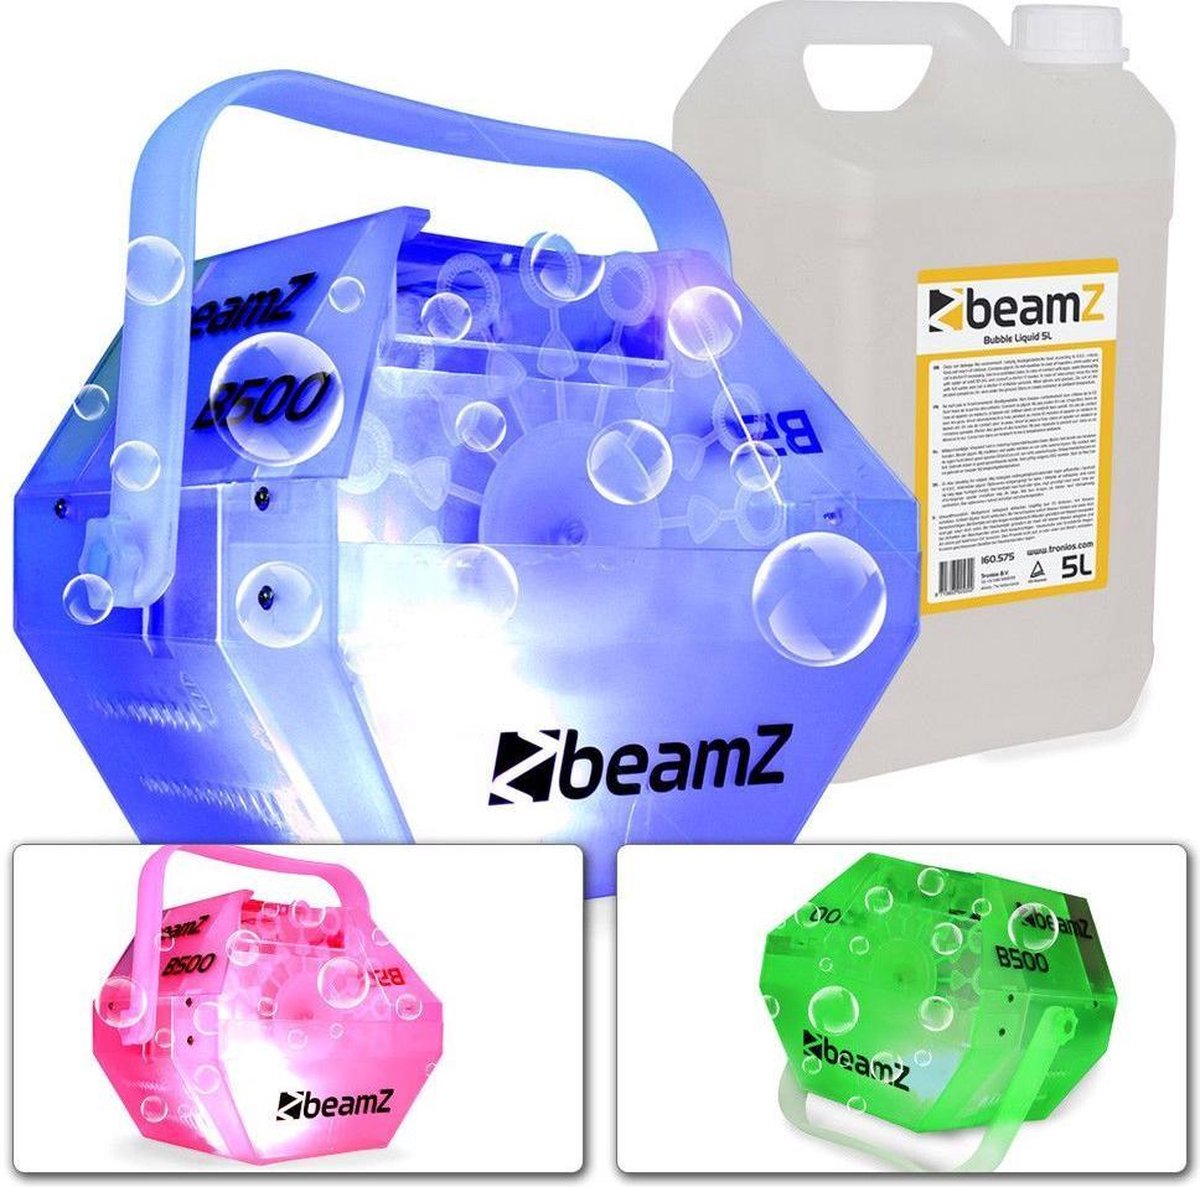 Bellenblaasmachine - BeamZ B500 LED - Transparante bellenblaas machine met LED's en 5 liter bellenblaasvloeistof - Compleet startpakket! - 